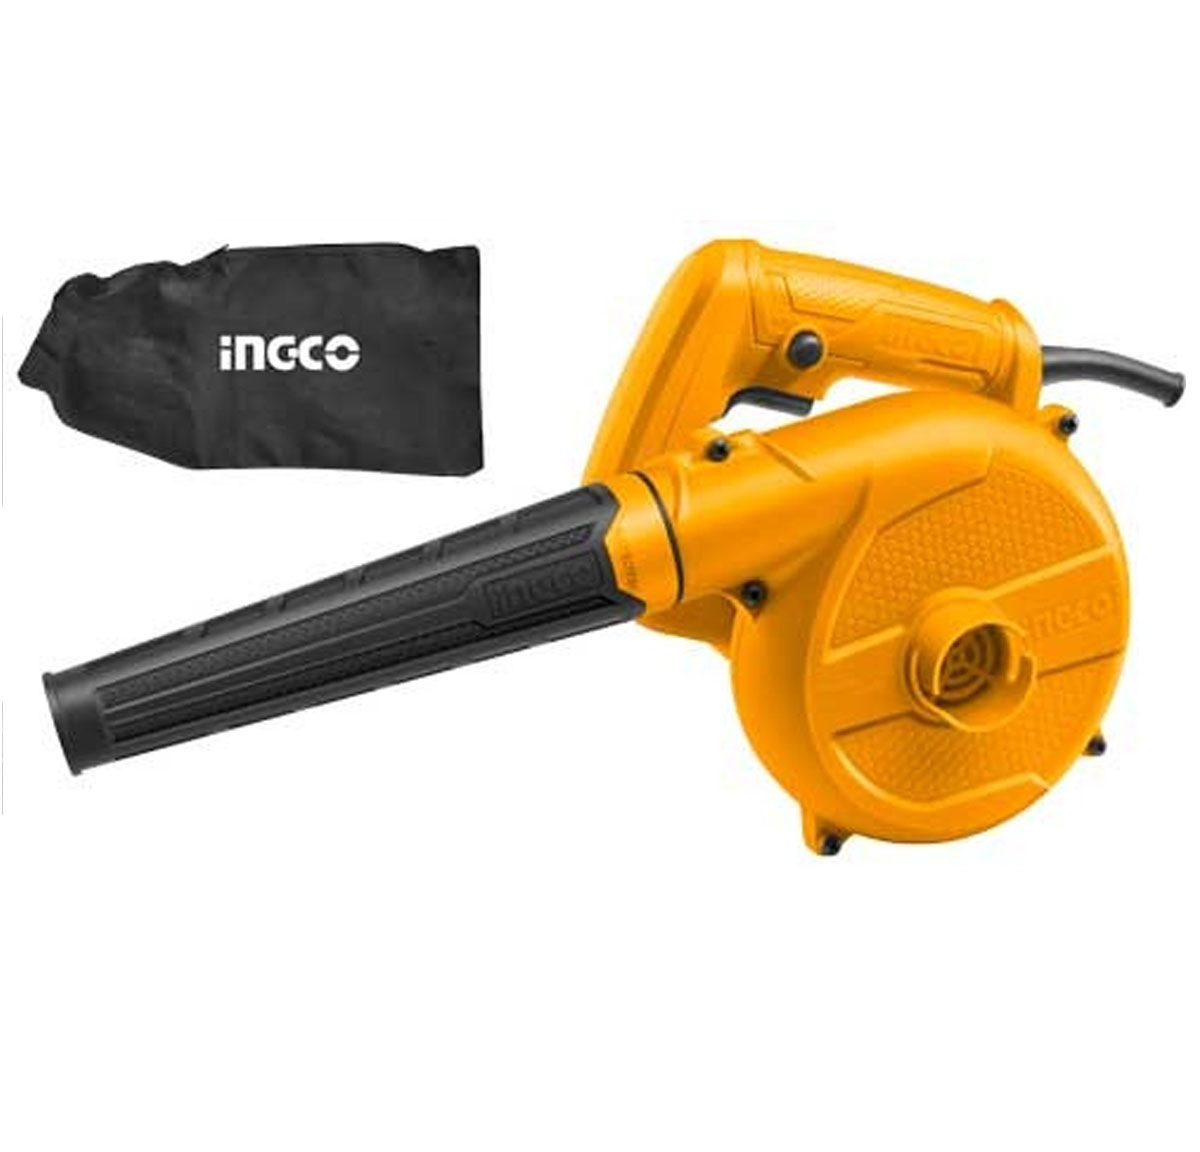 Ingco Aspirator blower 400W AB4018